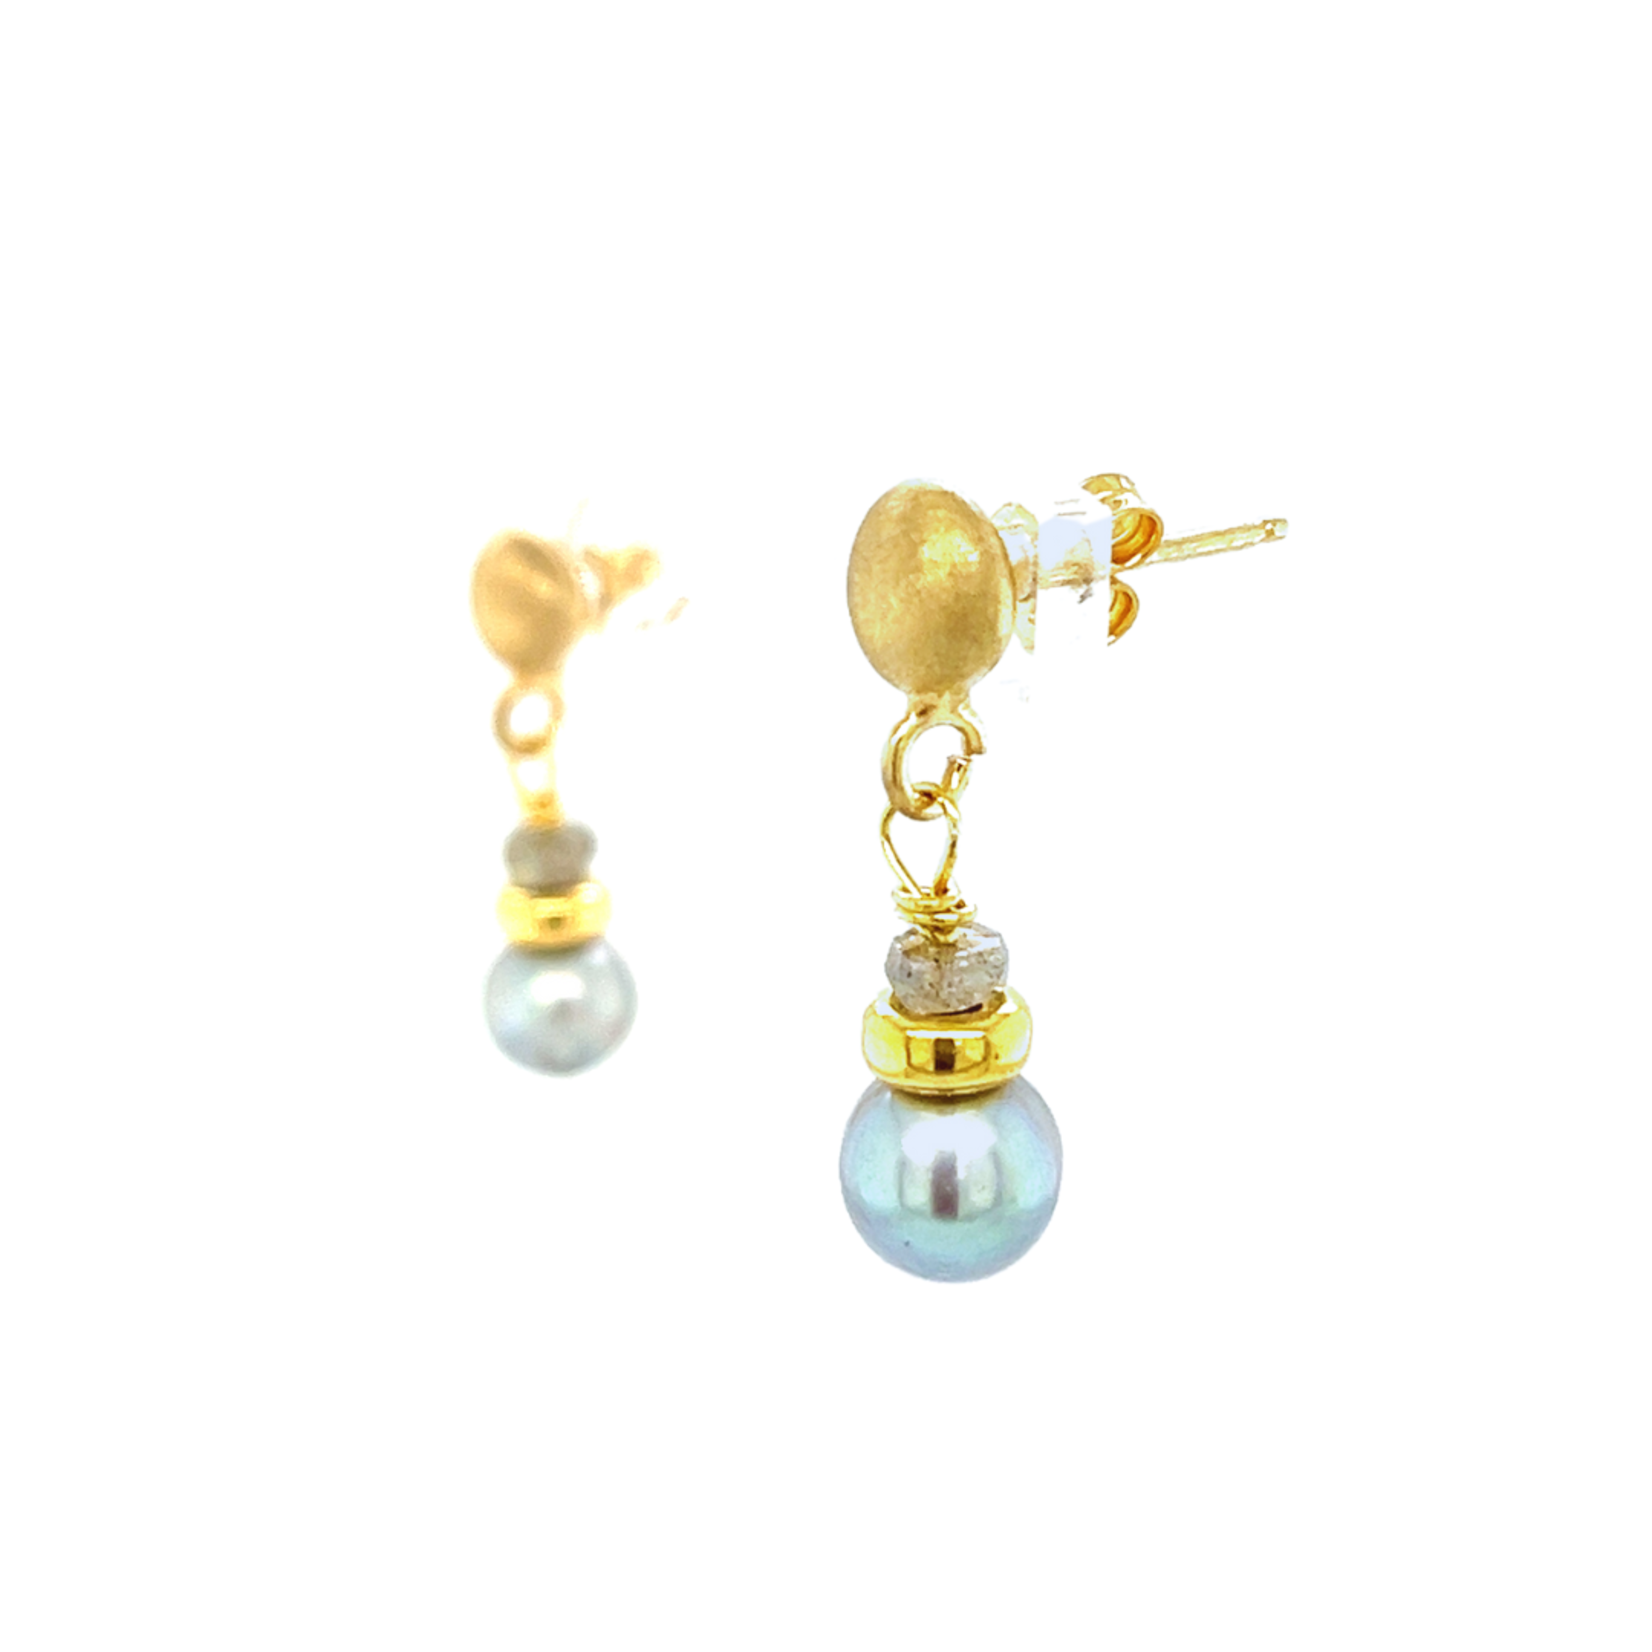 Pearl earrings,  gold stud